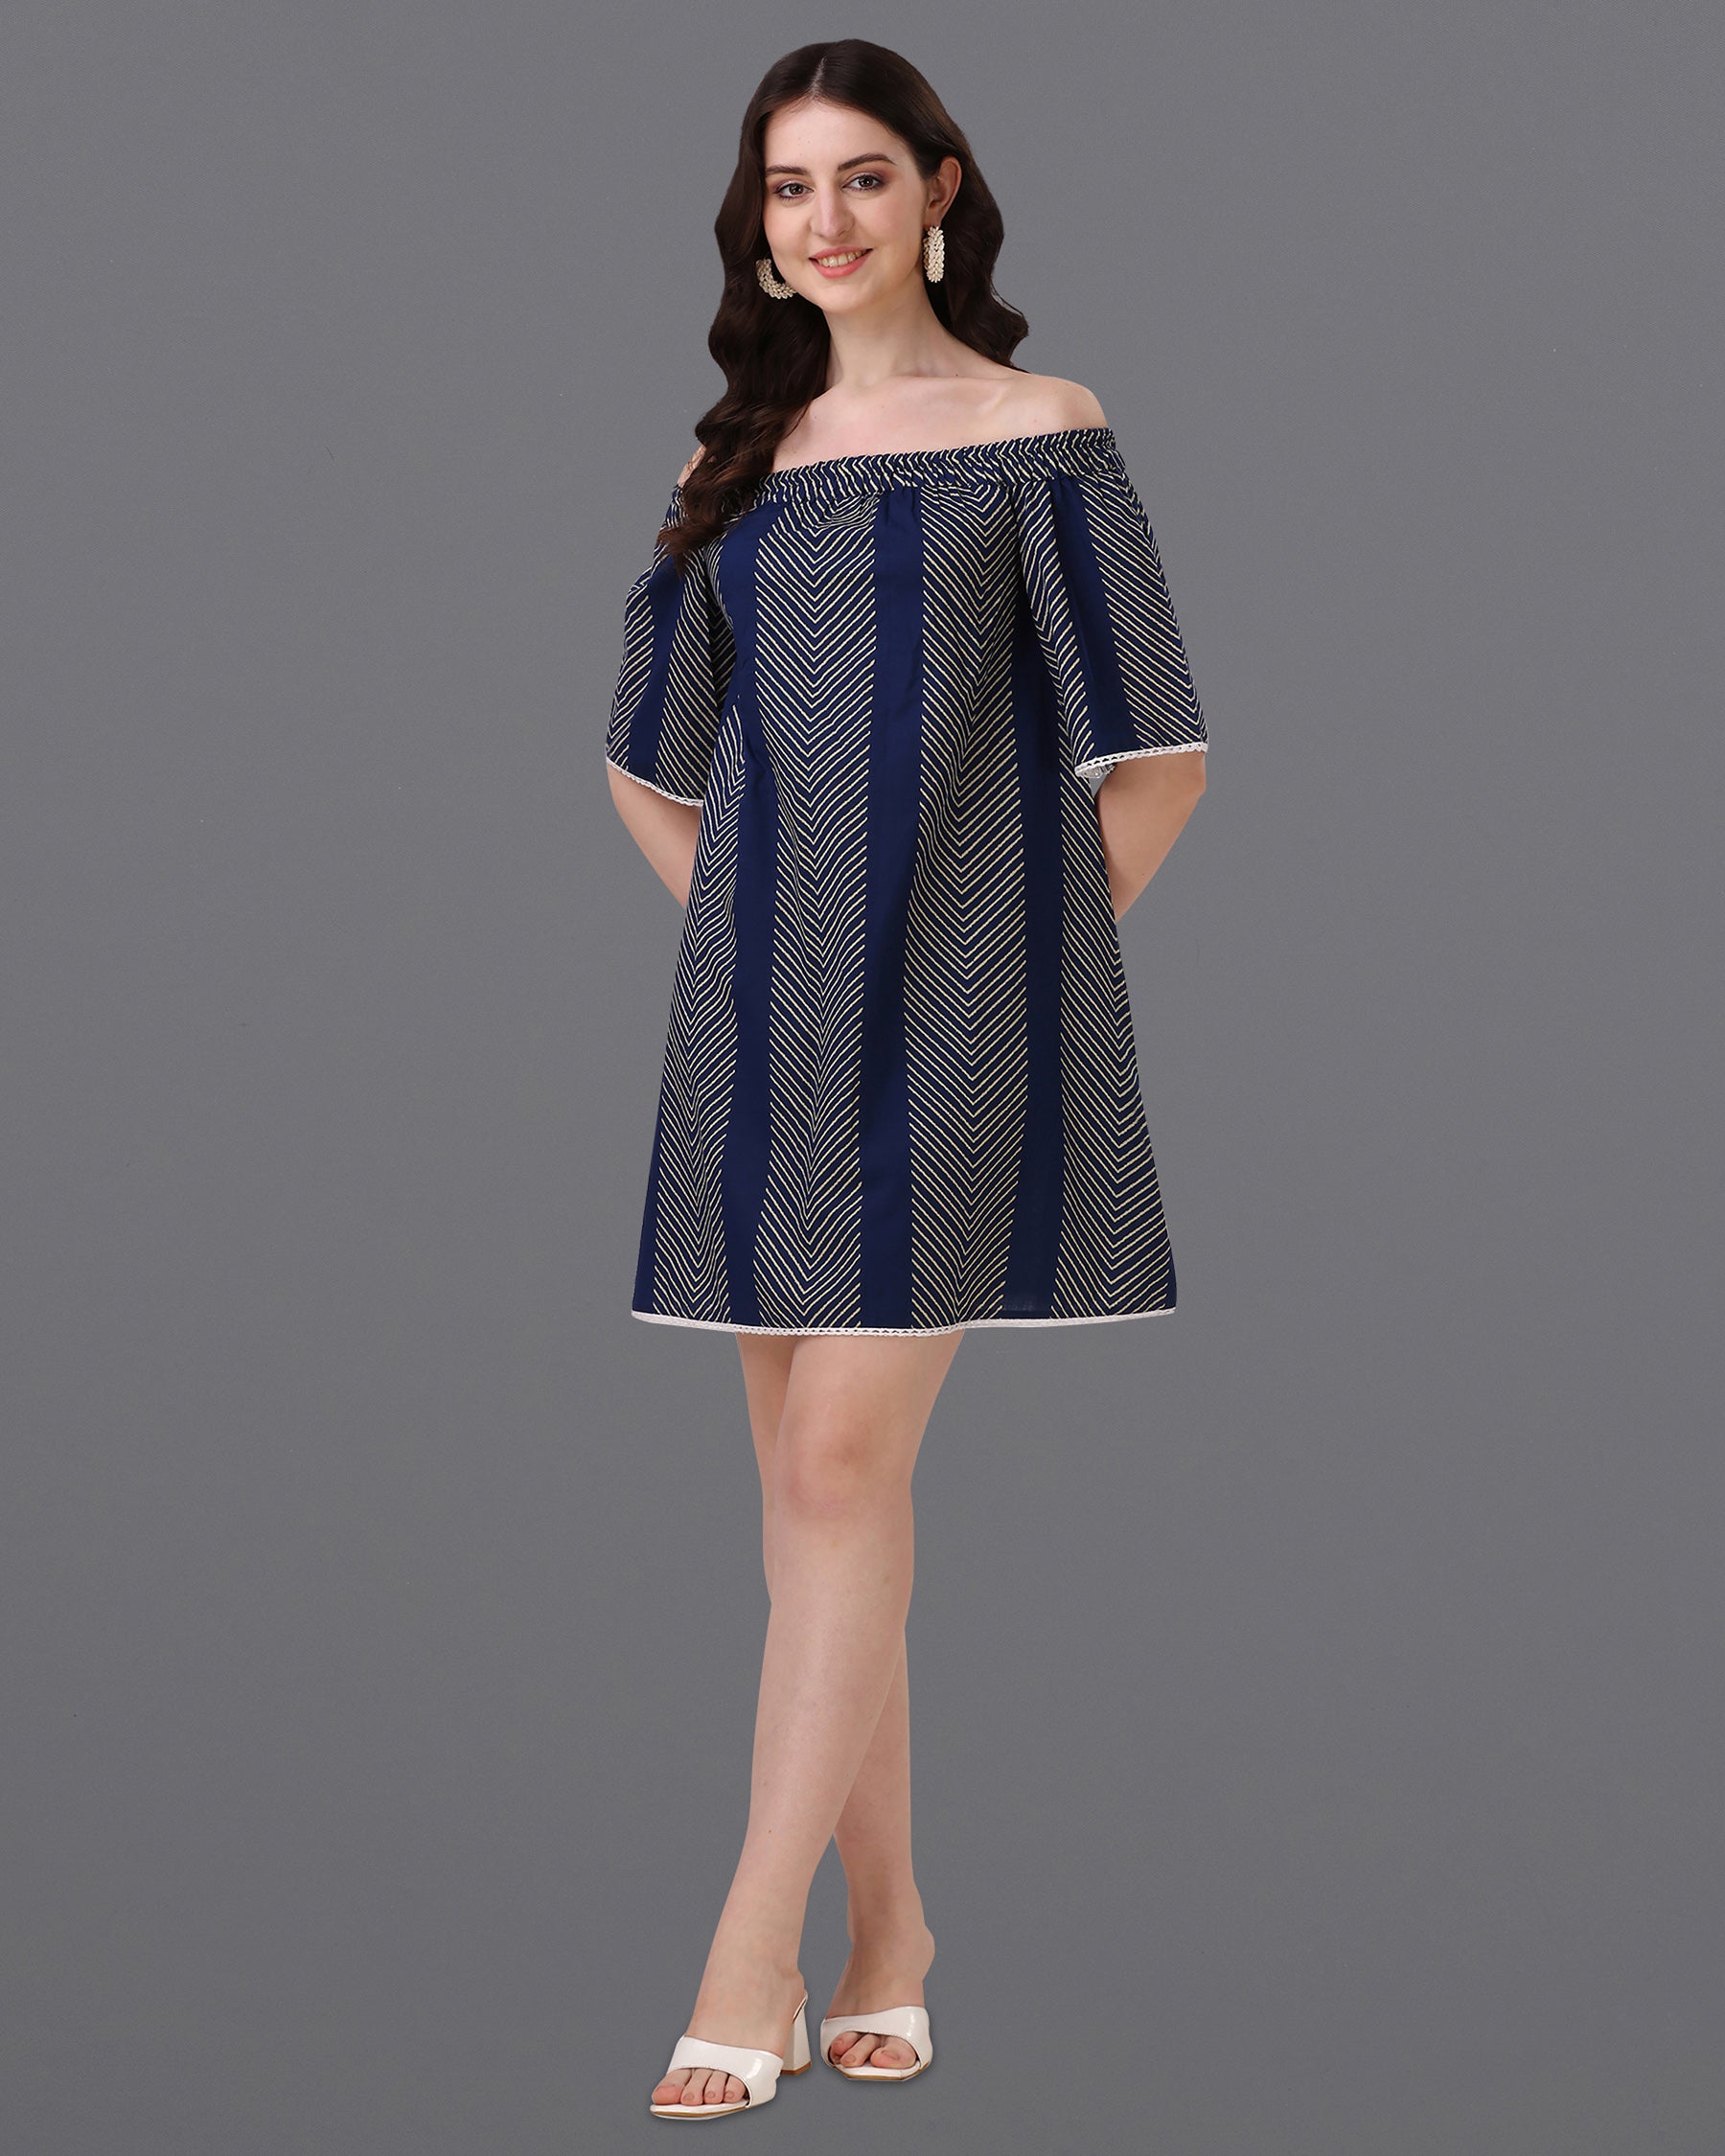 Ebony Clay Blue and Almond Geometric Print Super Soft Premium Cotton Off-shoulder Dress WD045-32, WD045-34, WD045-36, WD045-38, WD045-40, WD045-42